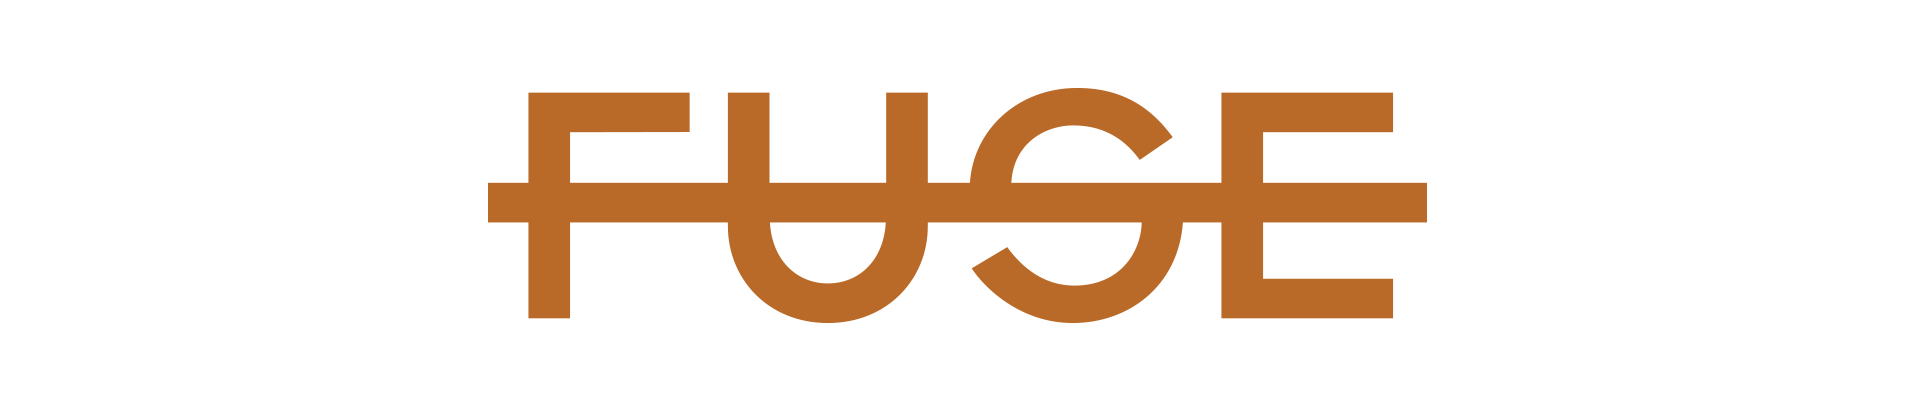 FUSE Fitness logo